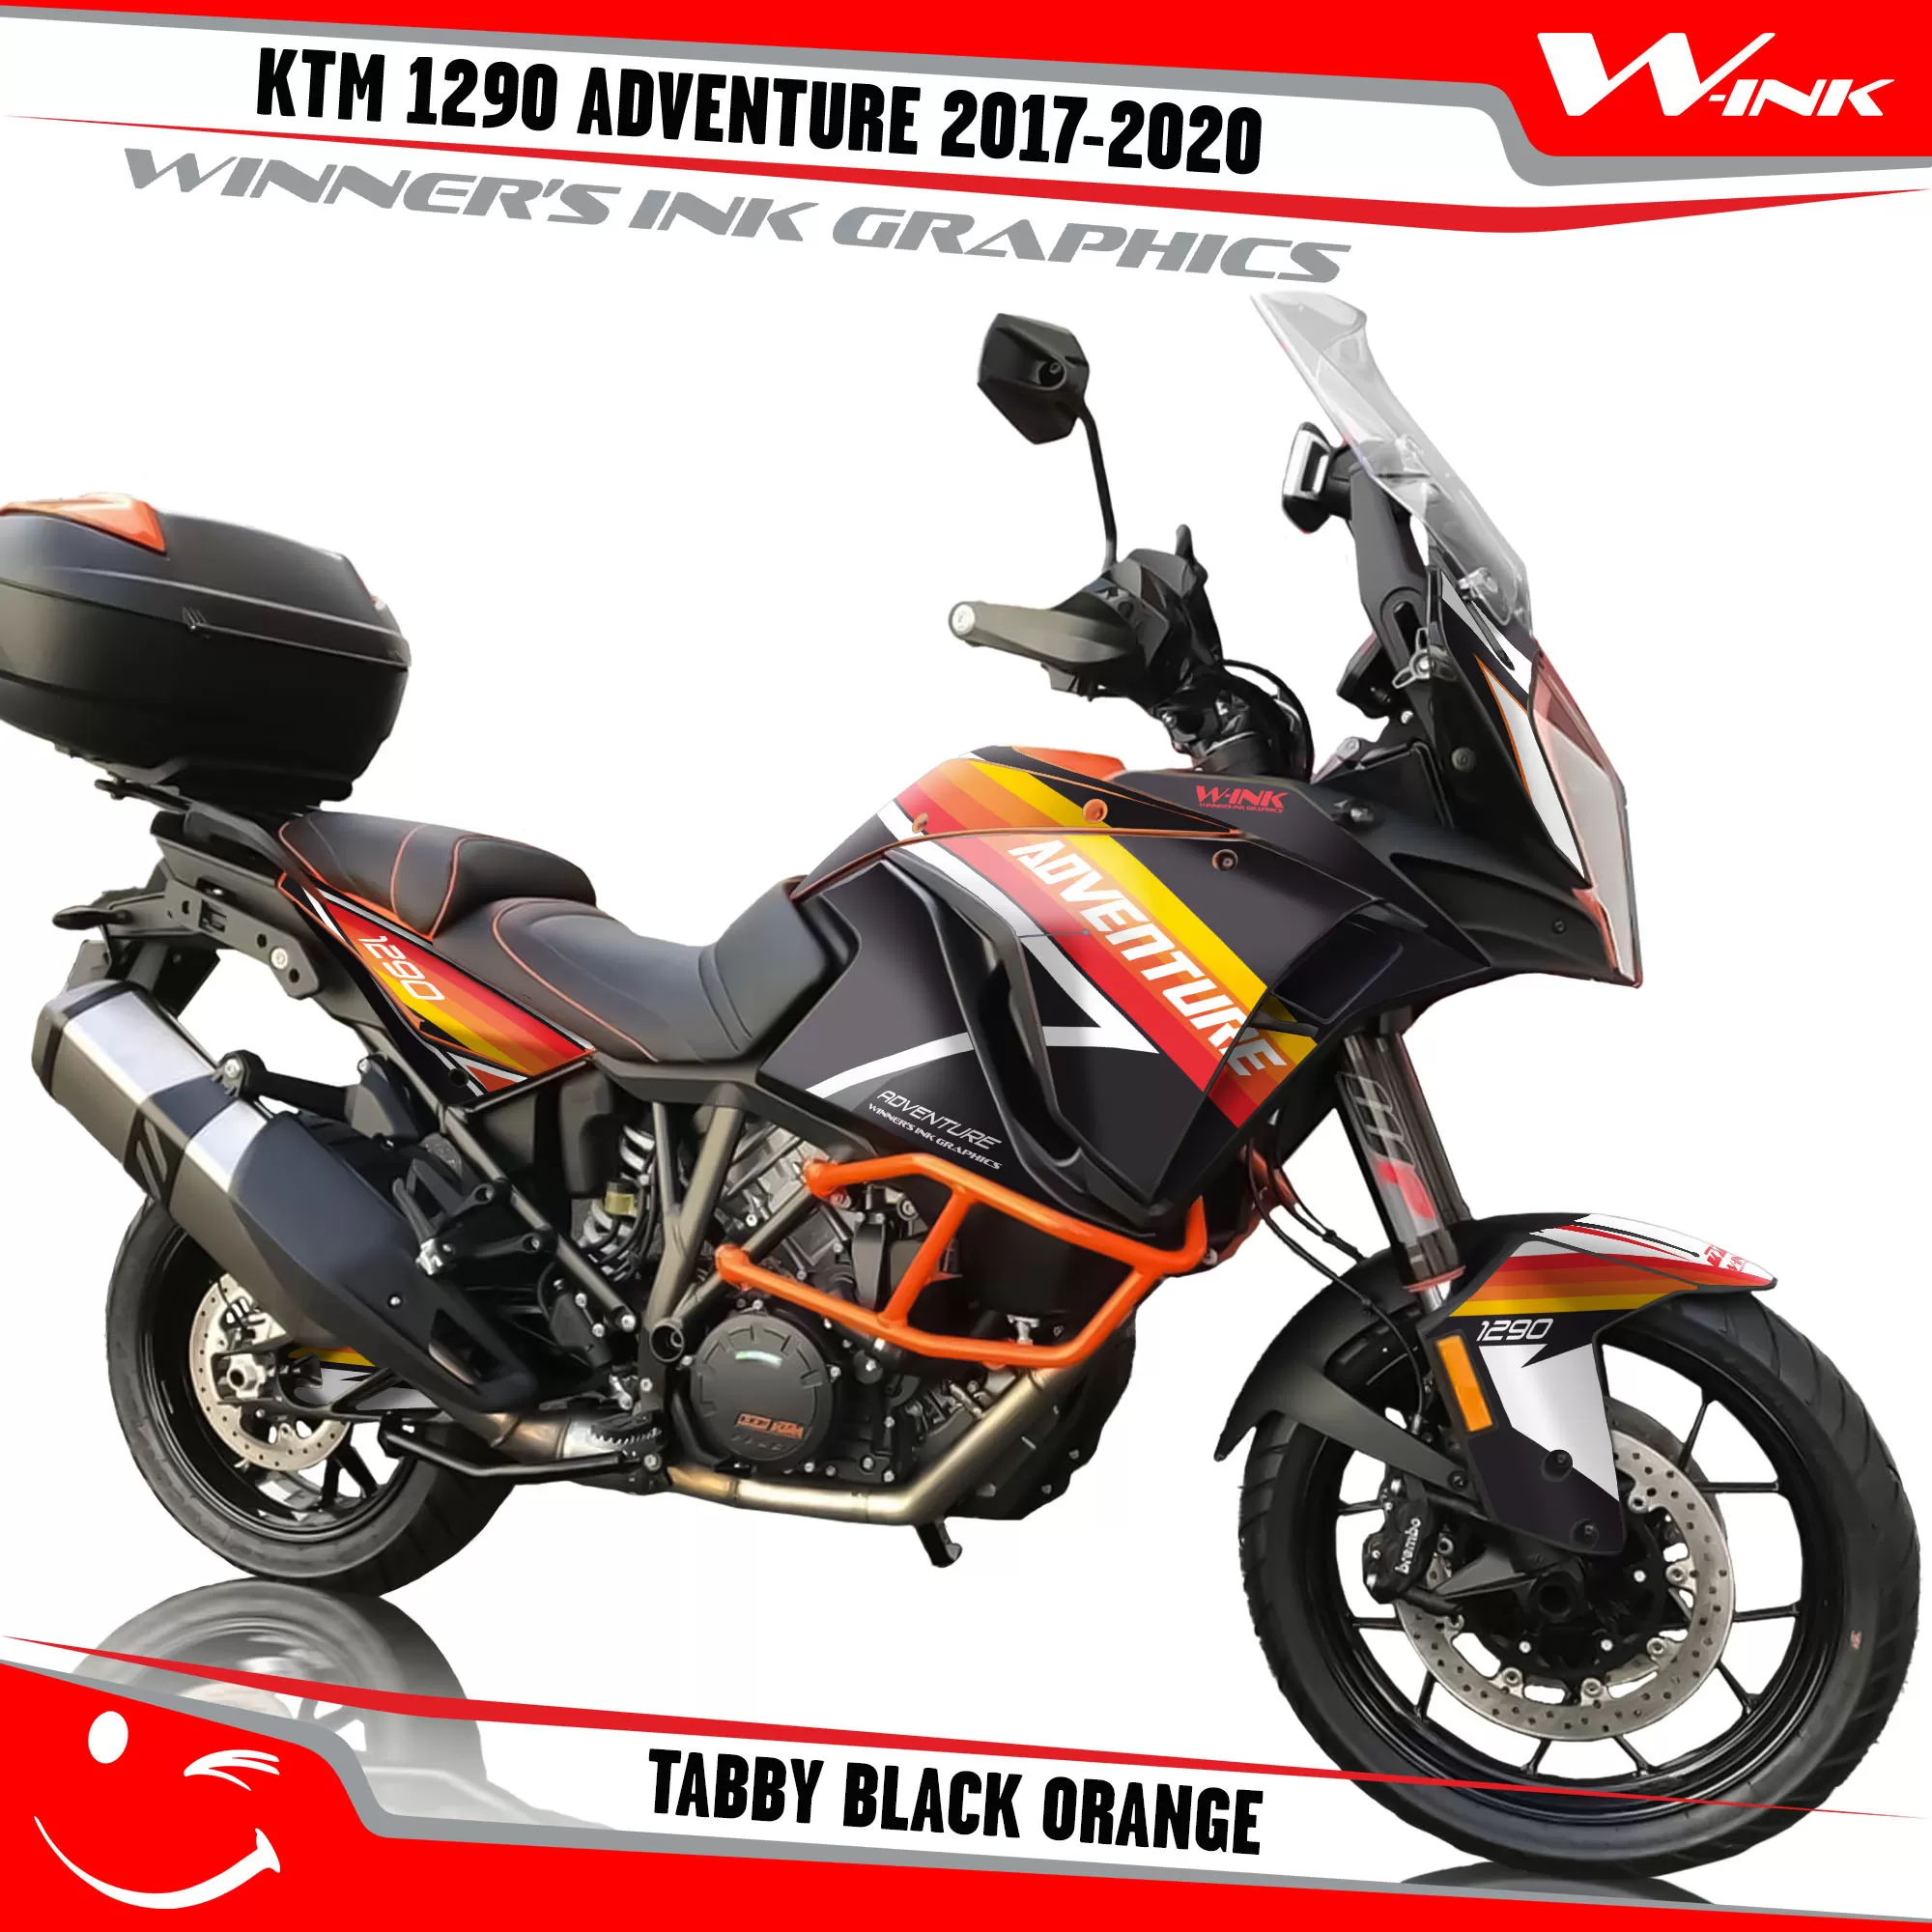 KTM-Adventure-1290-2017-2018-2019-2020-graphics-kit-and-decals-Tabby-Black-Orange